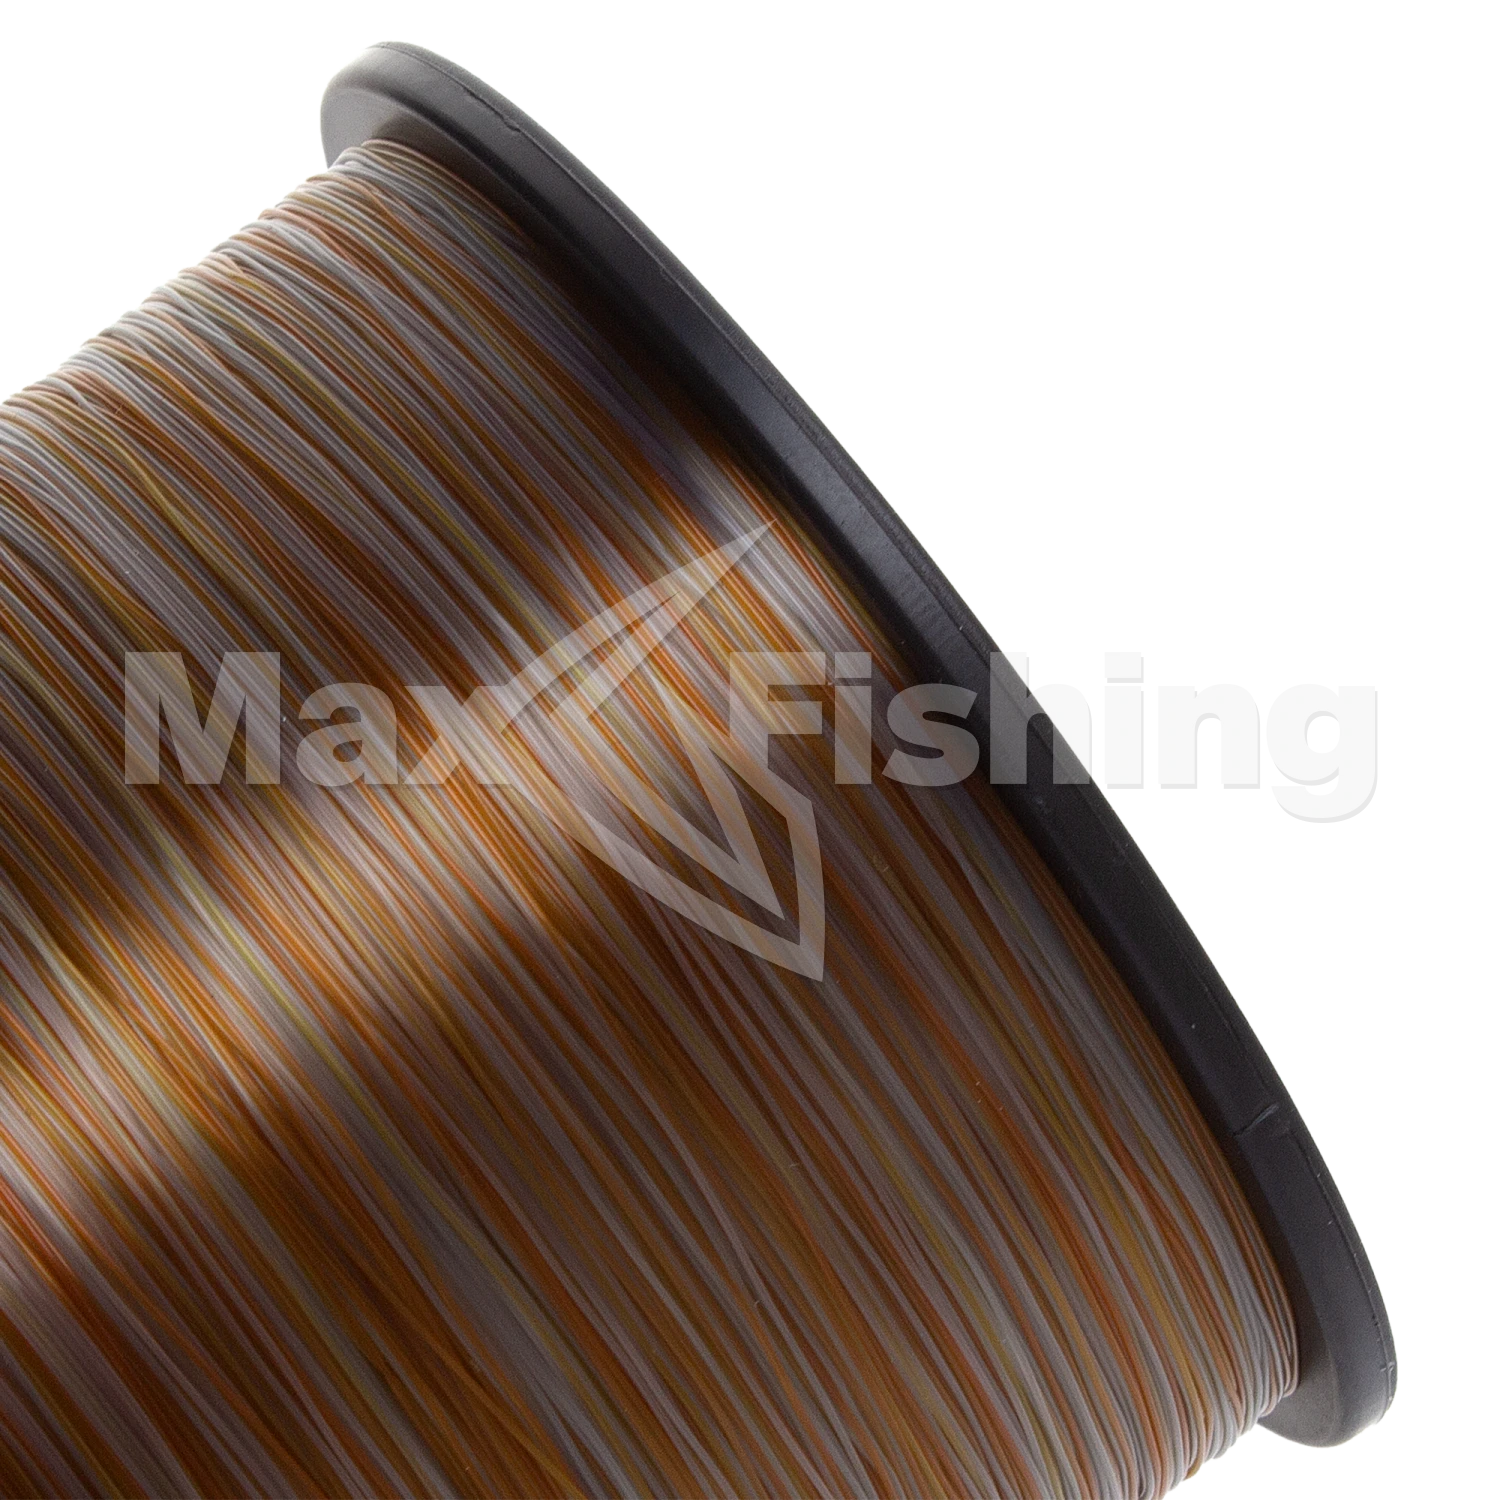 Леска монофильная Nautilus Camou Brown Sinking 0,405мм 1200м (brown)